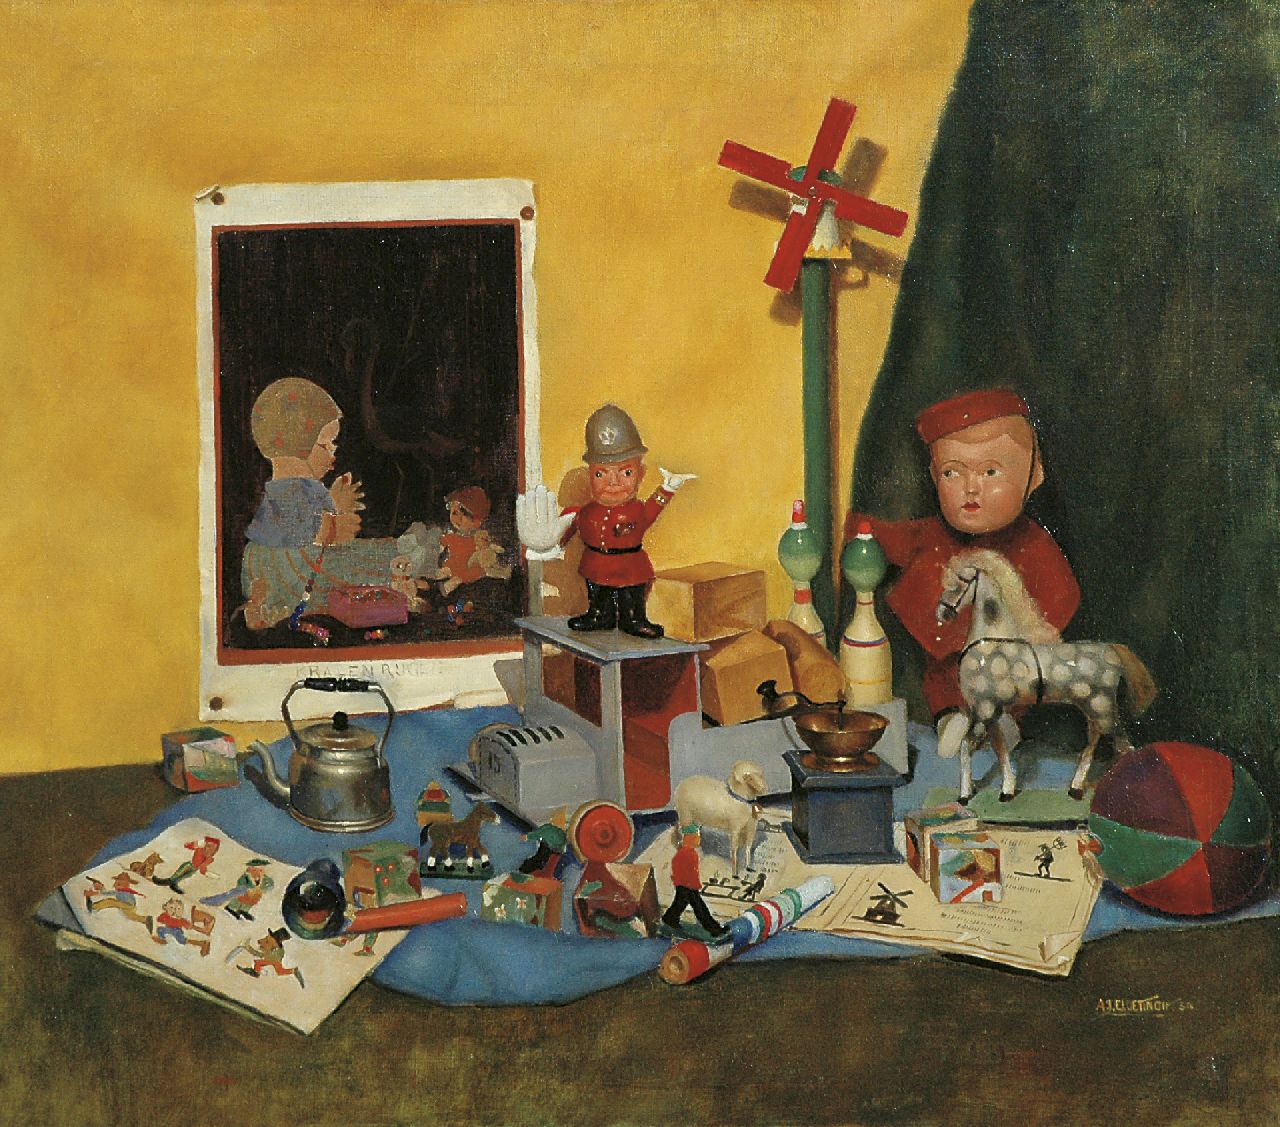 A.J. Cloetingh | Children's toys, Öl auf Leinwand, 70,3 x 80,3 cm, signed l.r. und dated '30